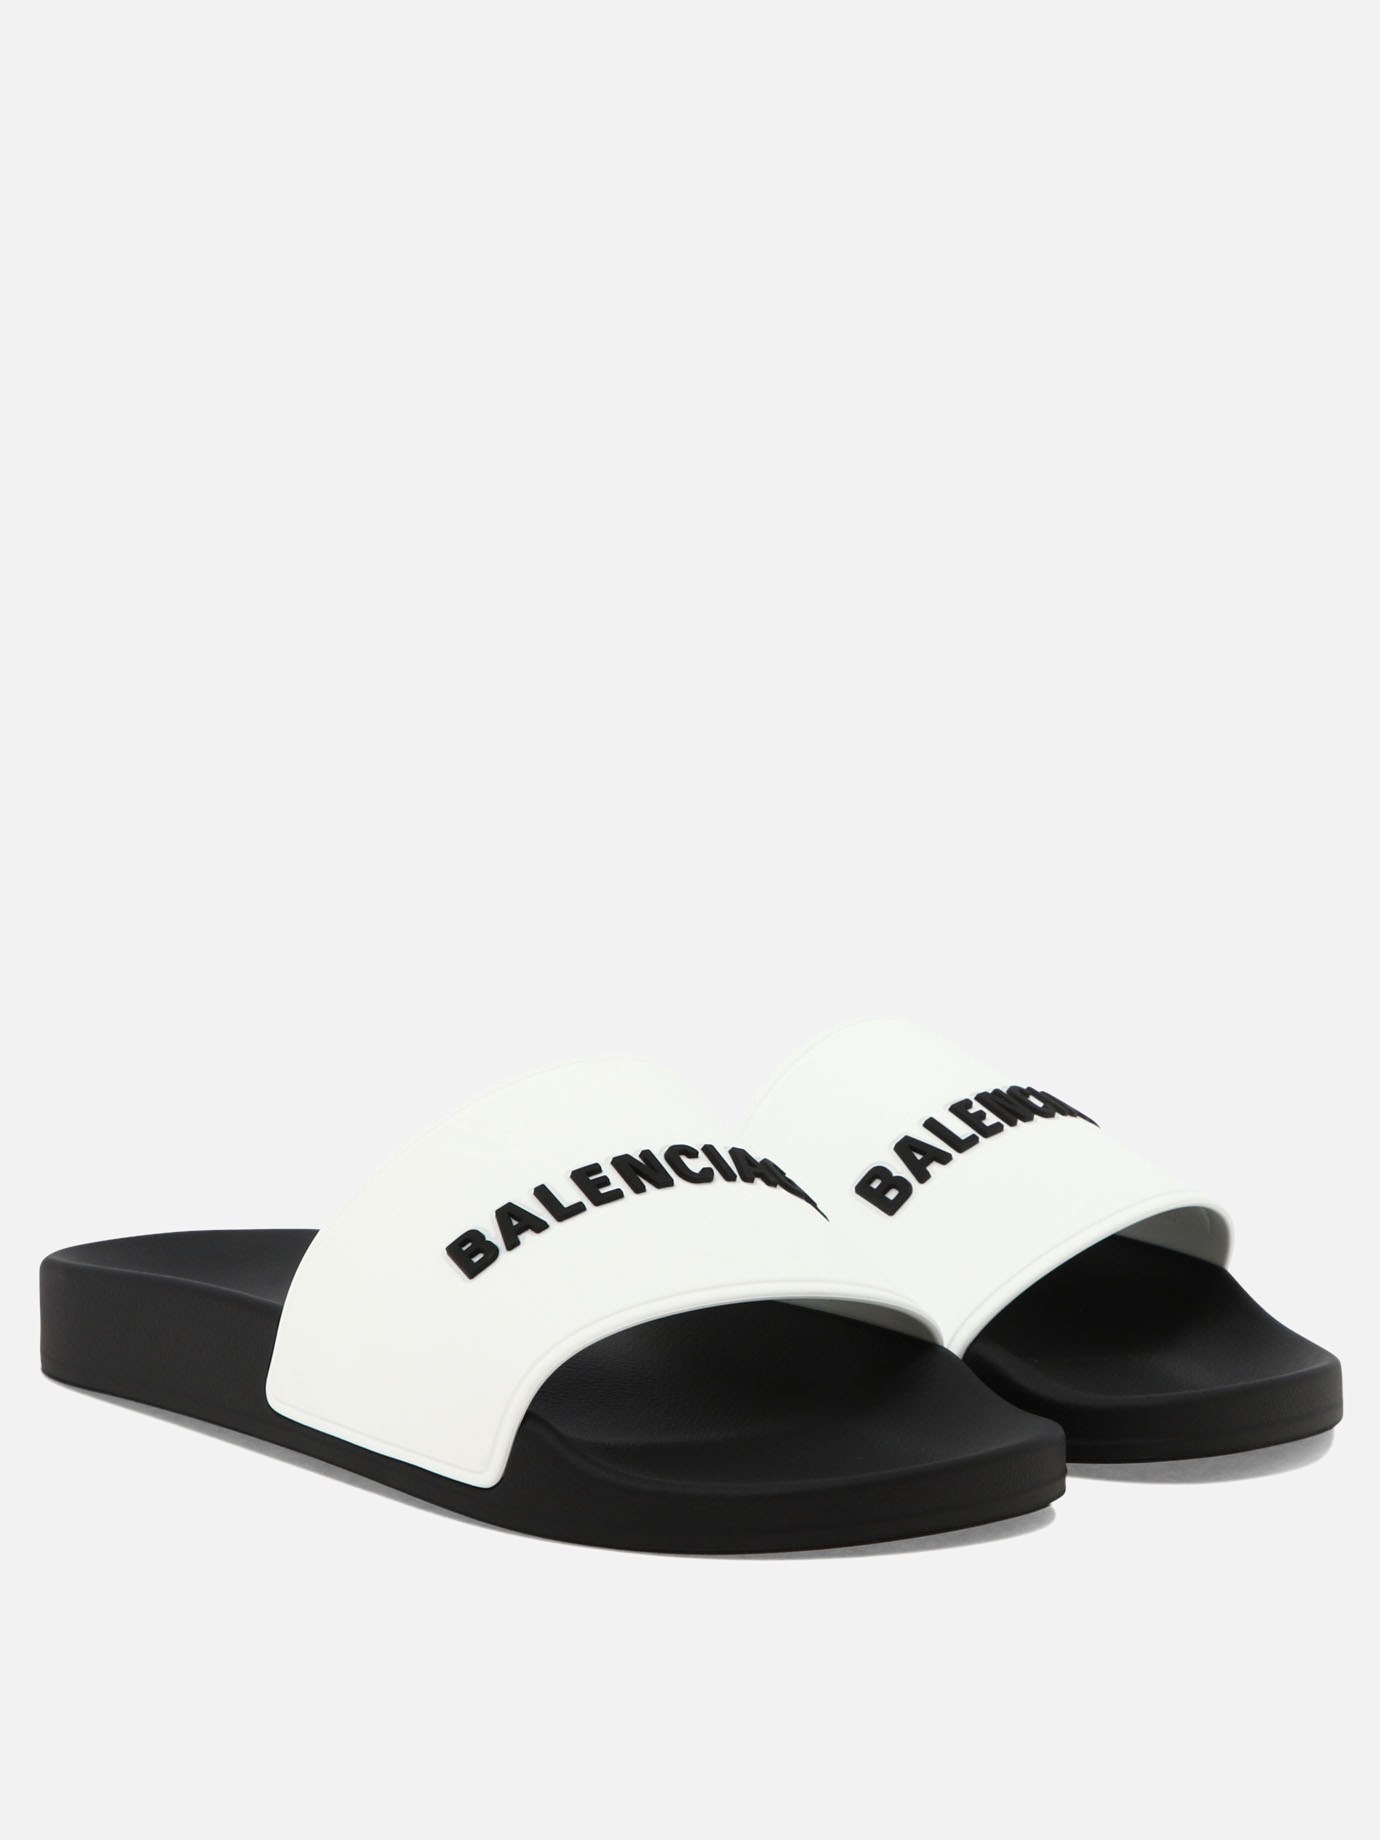 3D logo sandals by Balenciaga